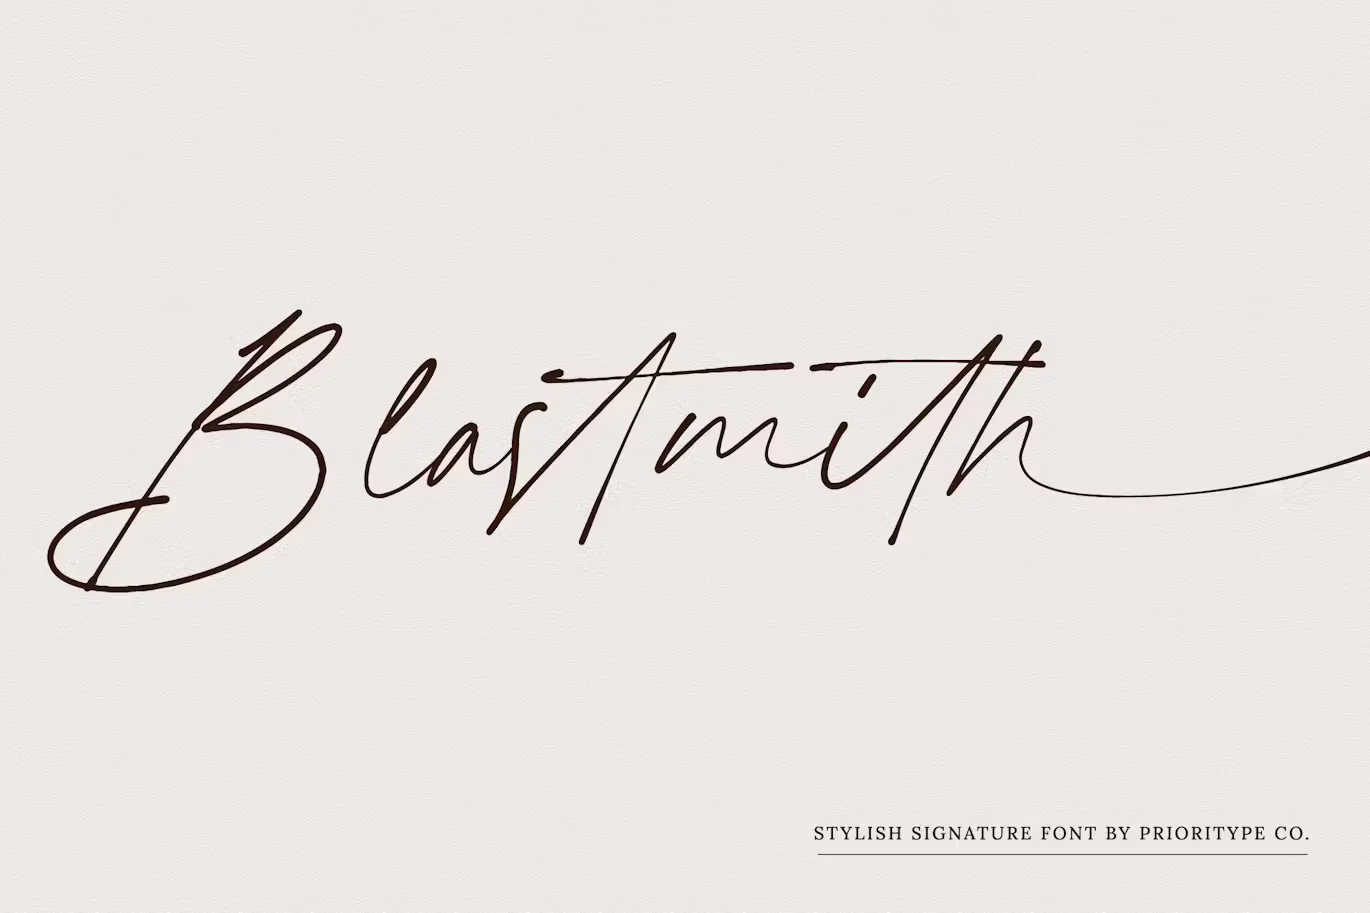 Blastmith - Stylish Signature Font